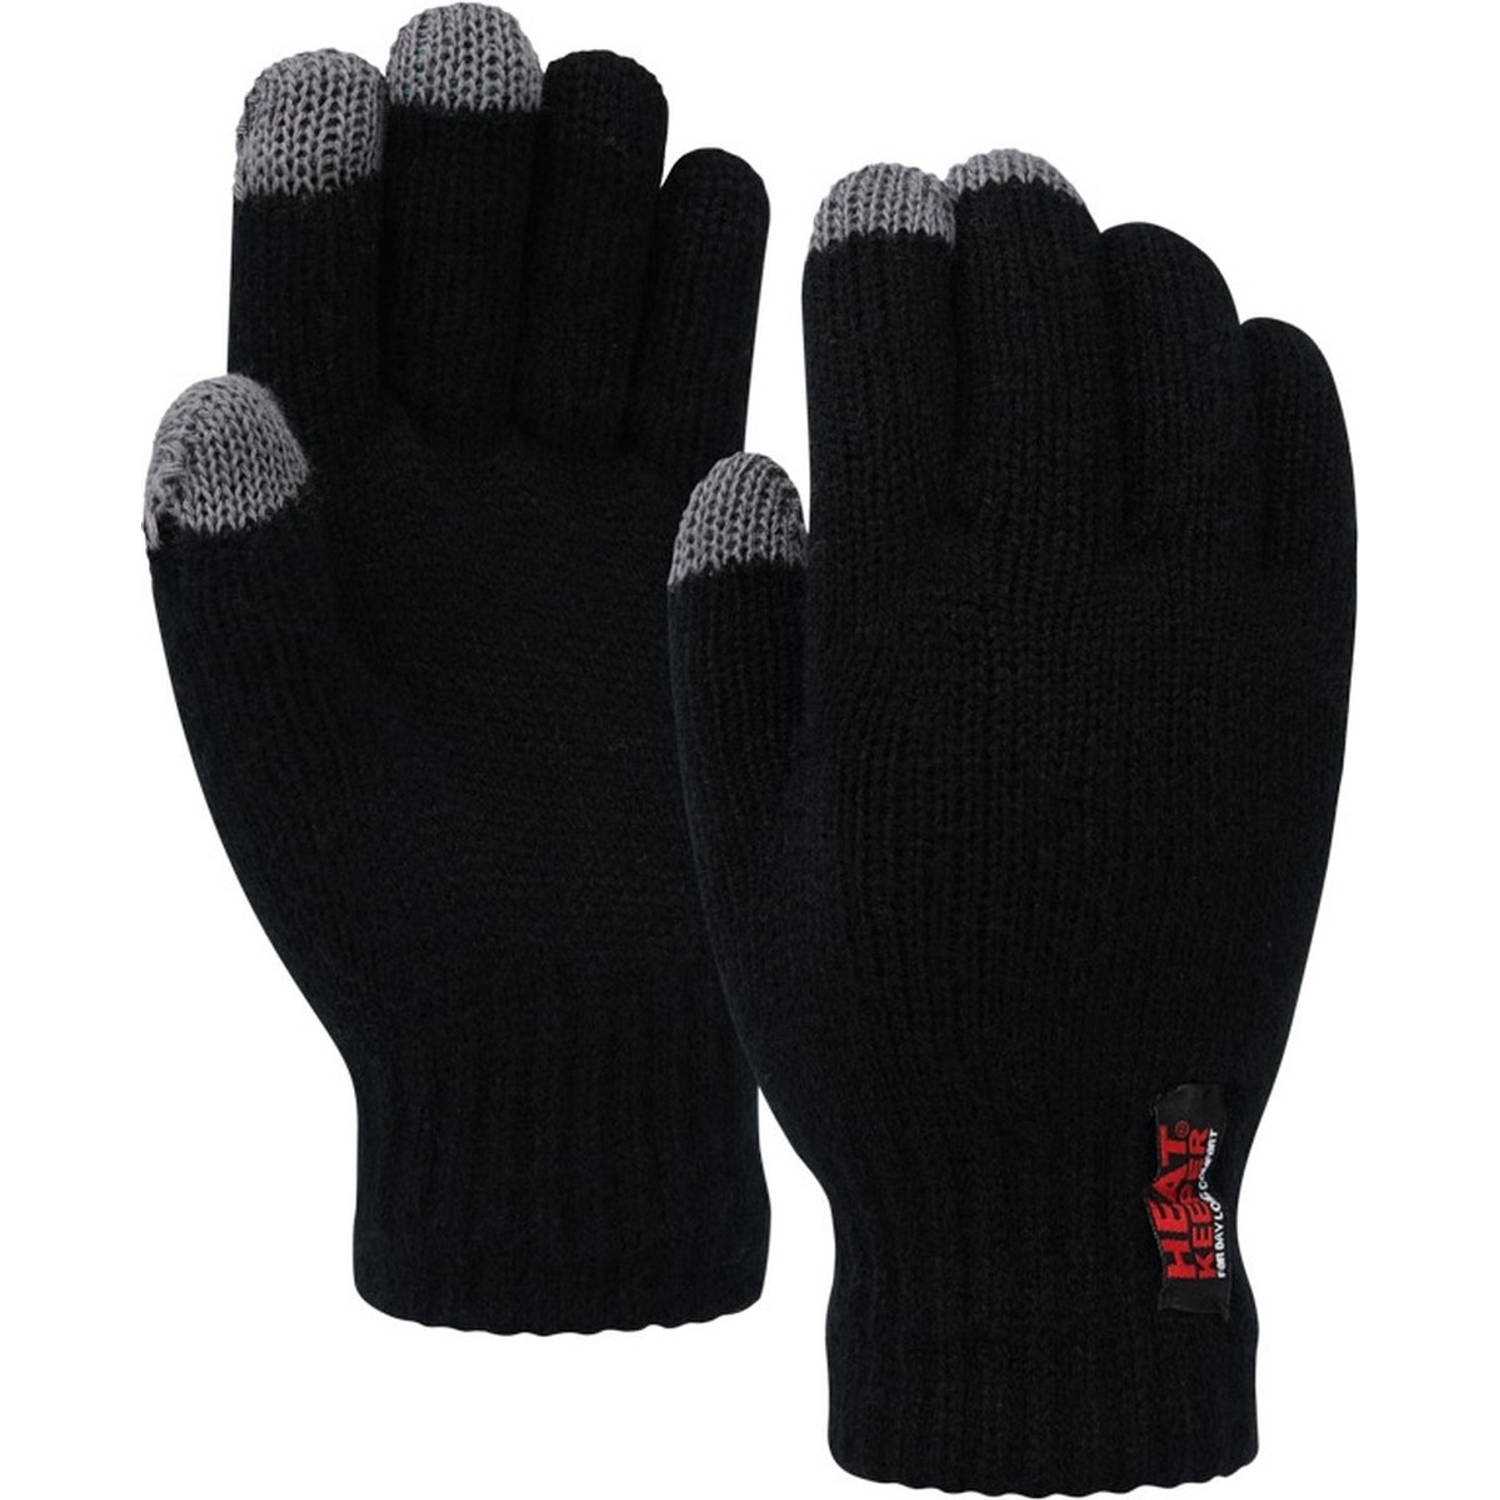 Heat Keeper Thermo Handschoenen - Kleur Zwart - Extra Warm - Maat L/xl